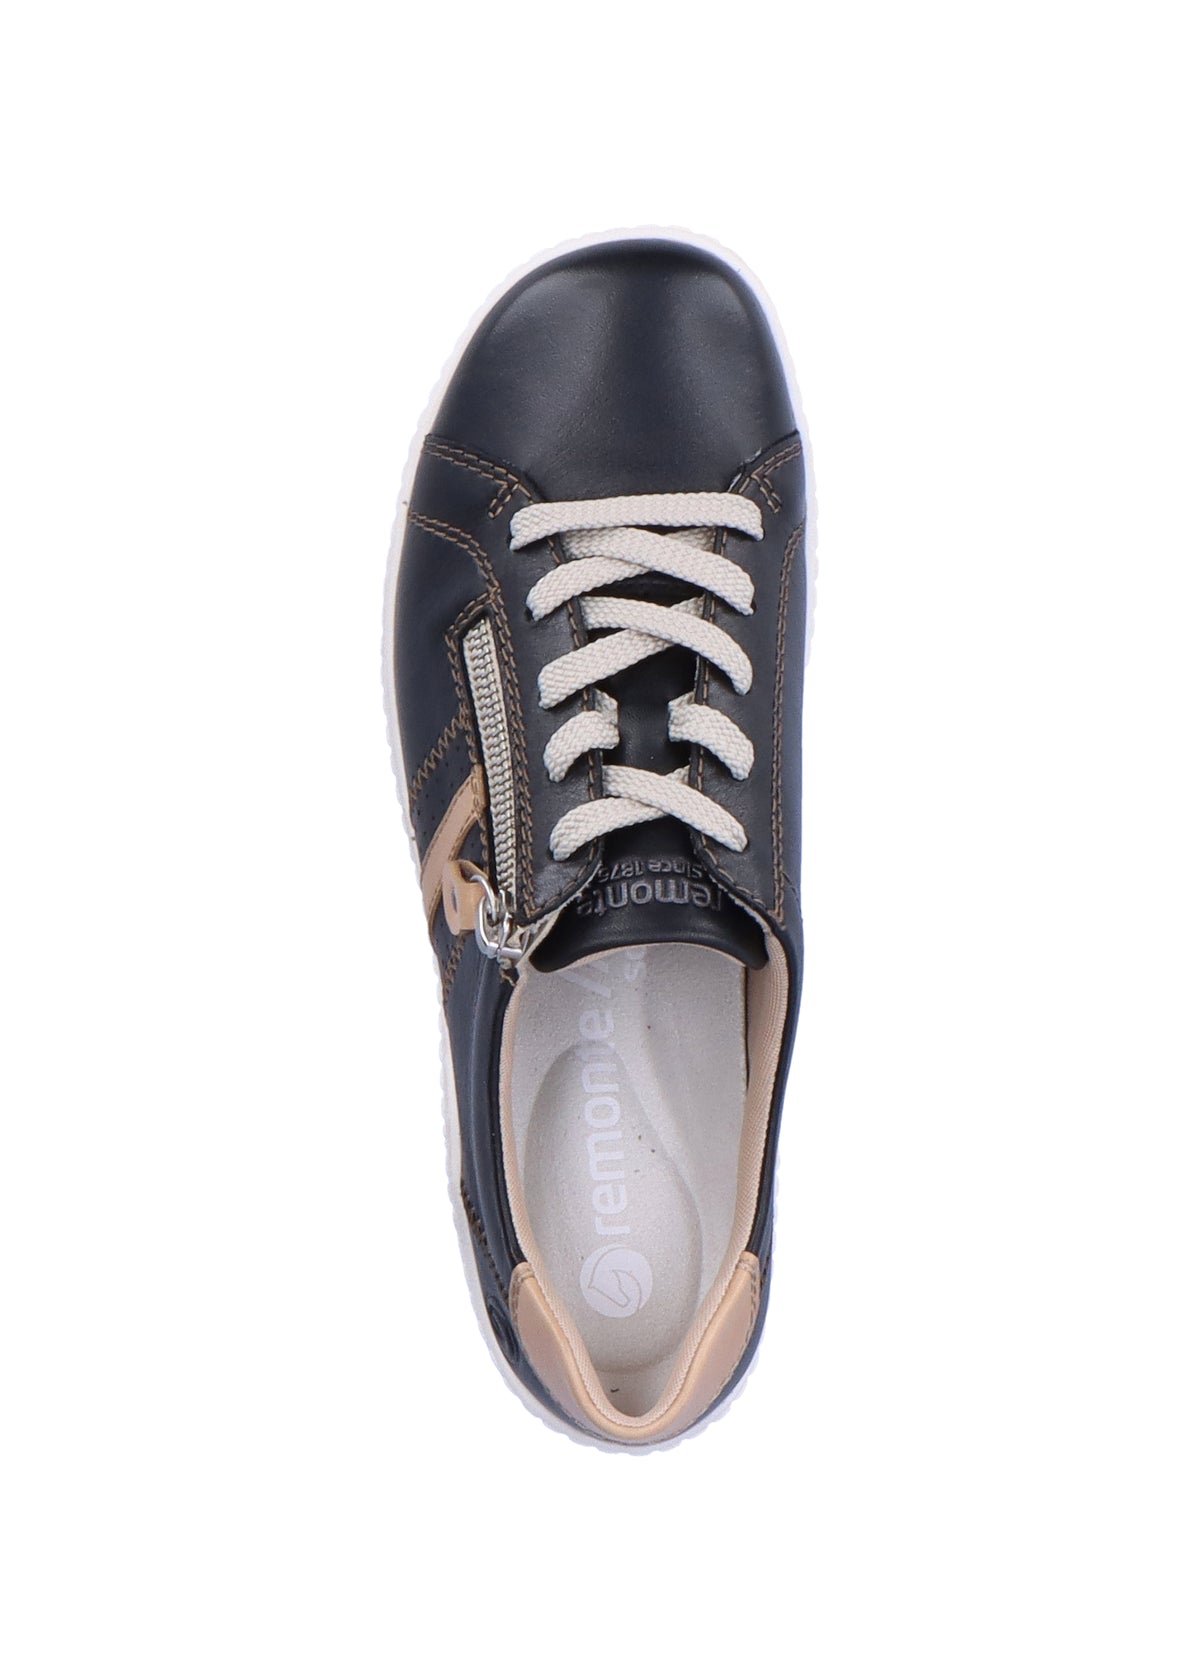 Lace-up Walking Shoes - black, Light brown details